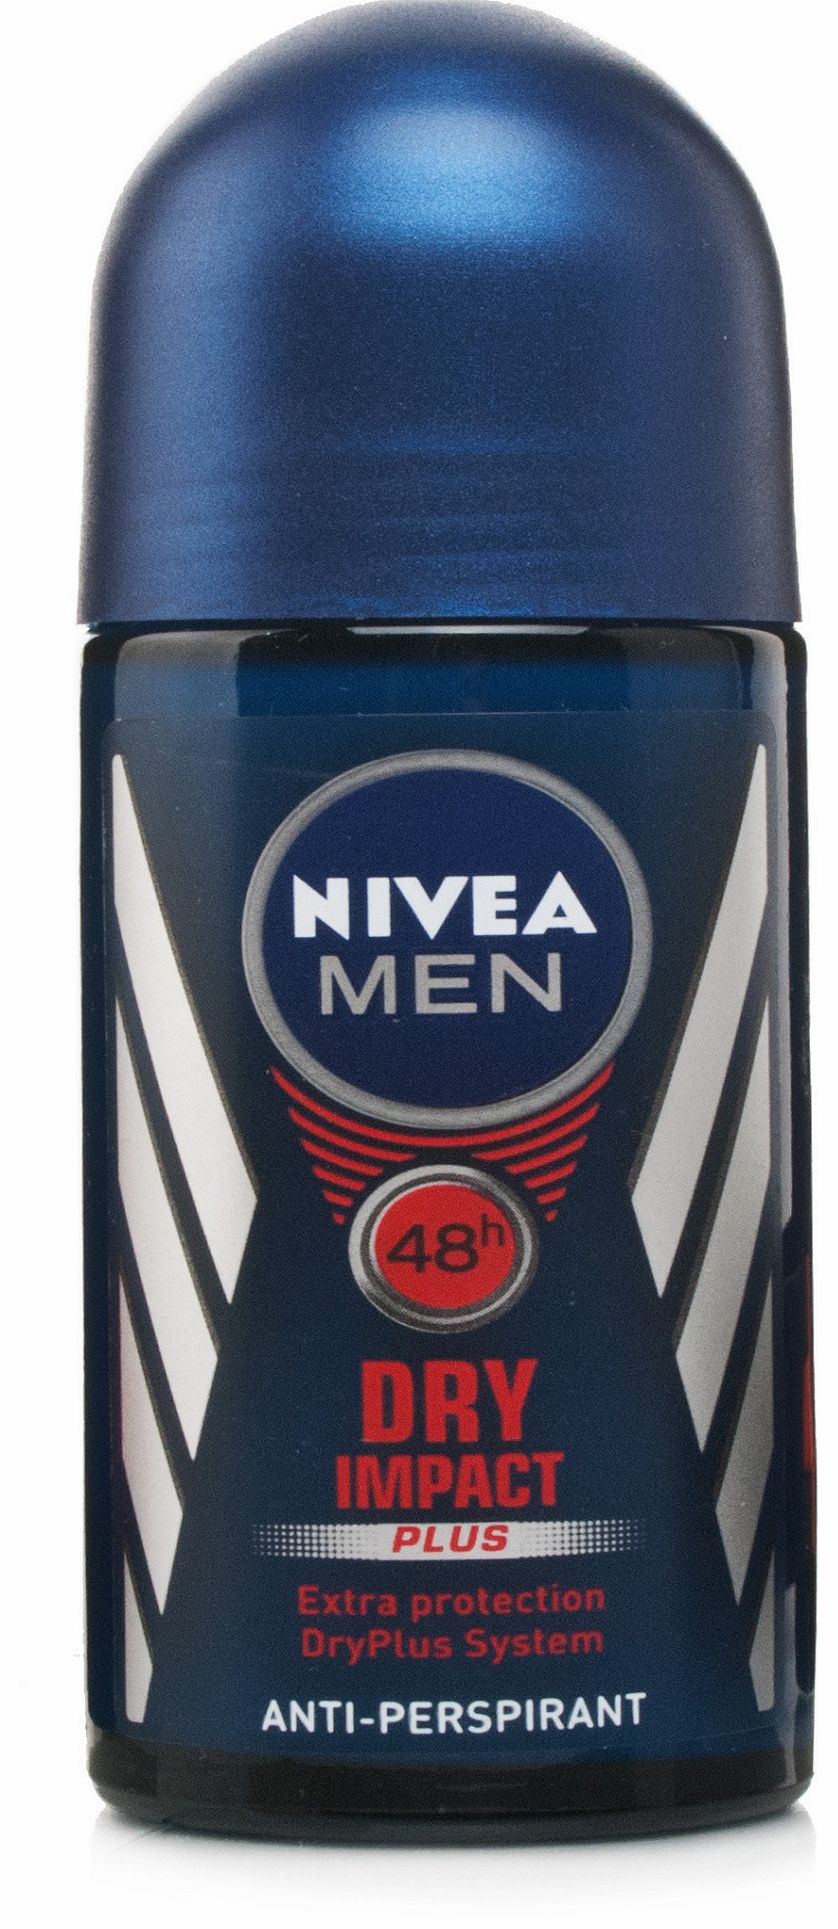 For Men Dry Impact Roll-On